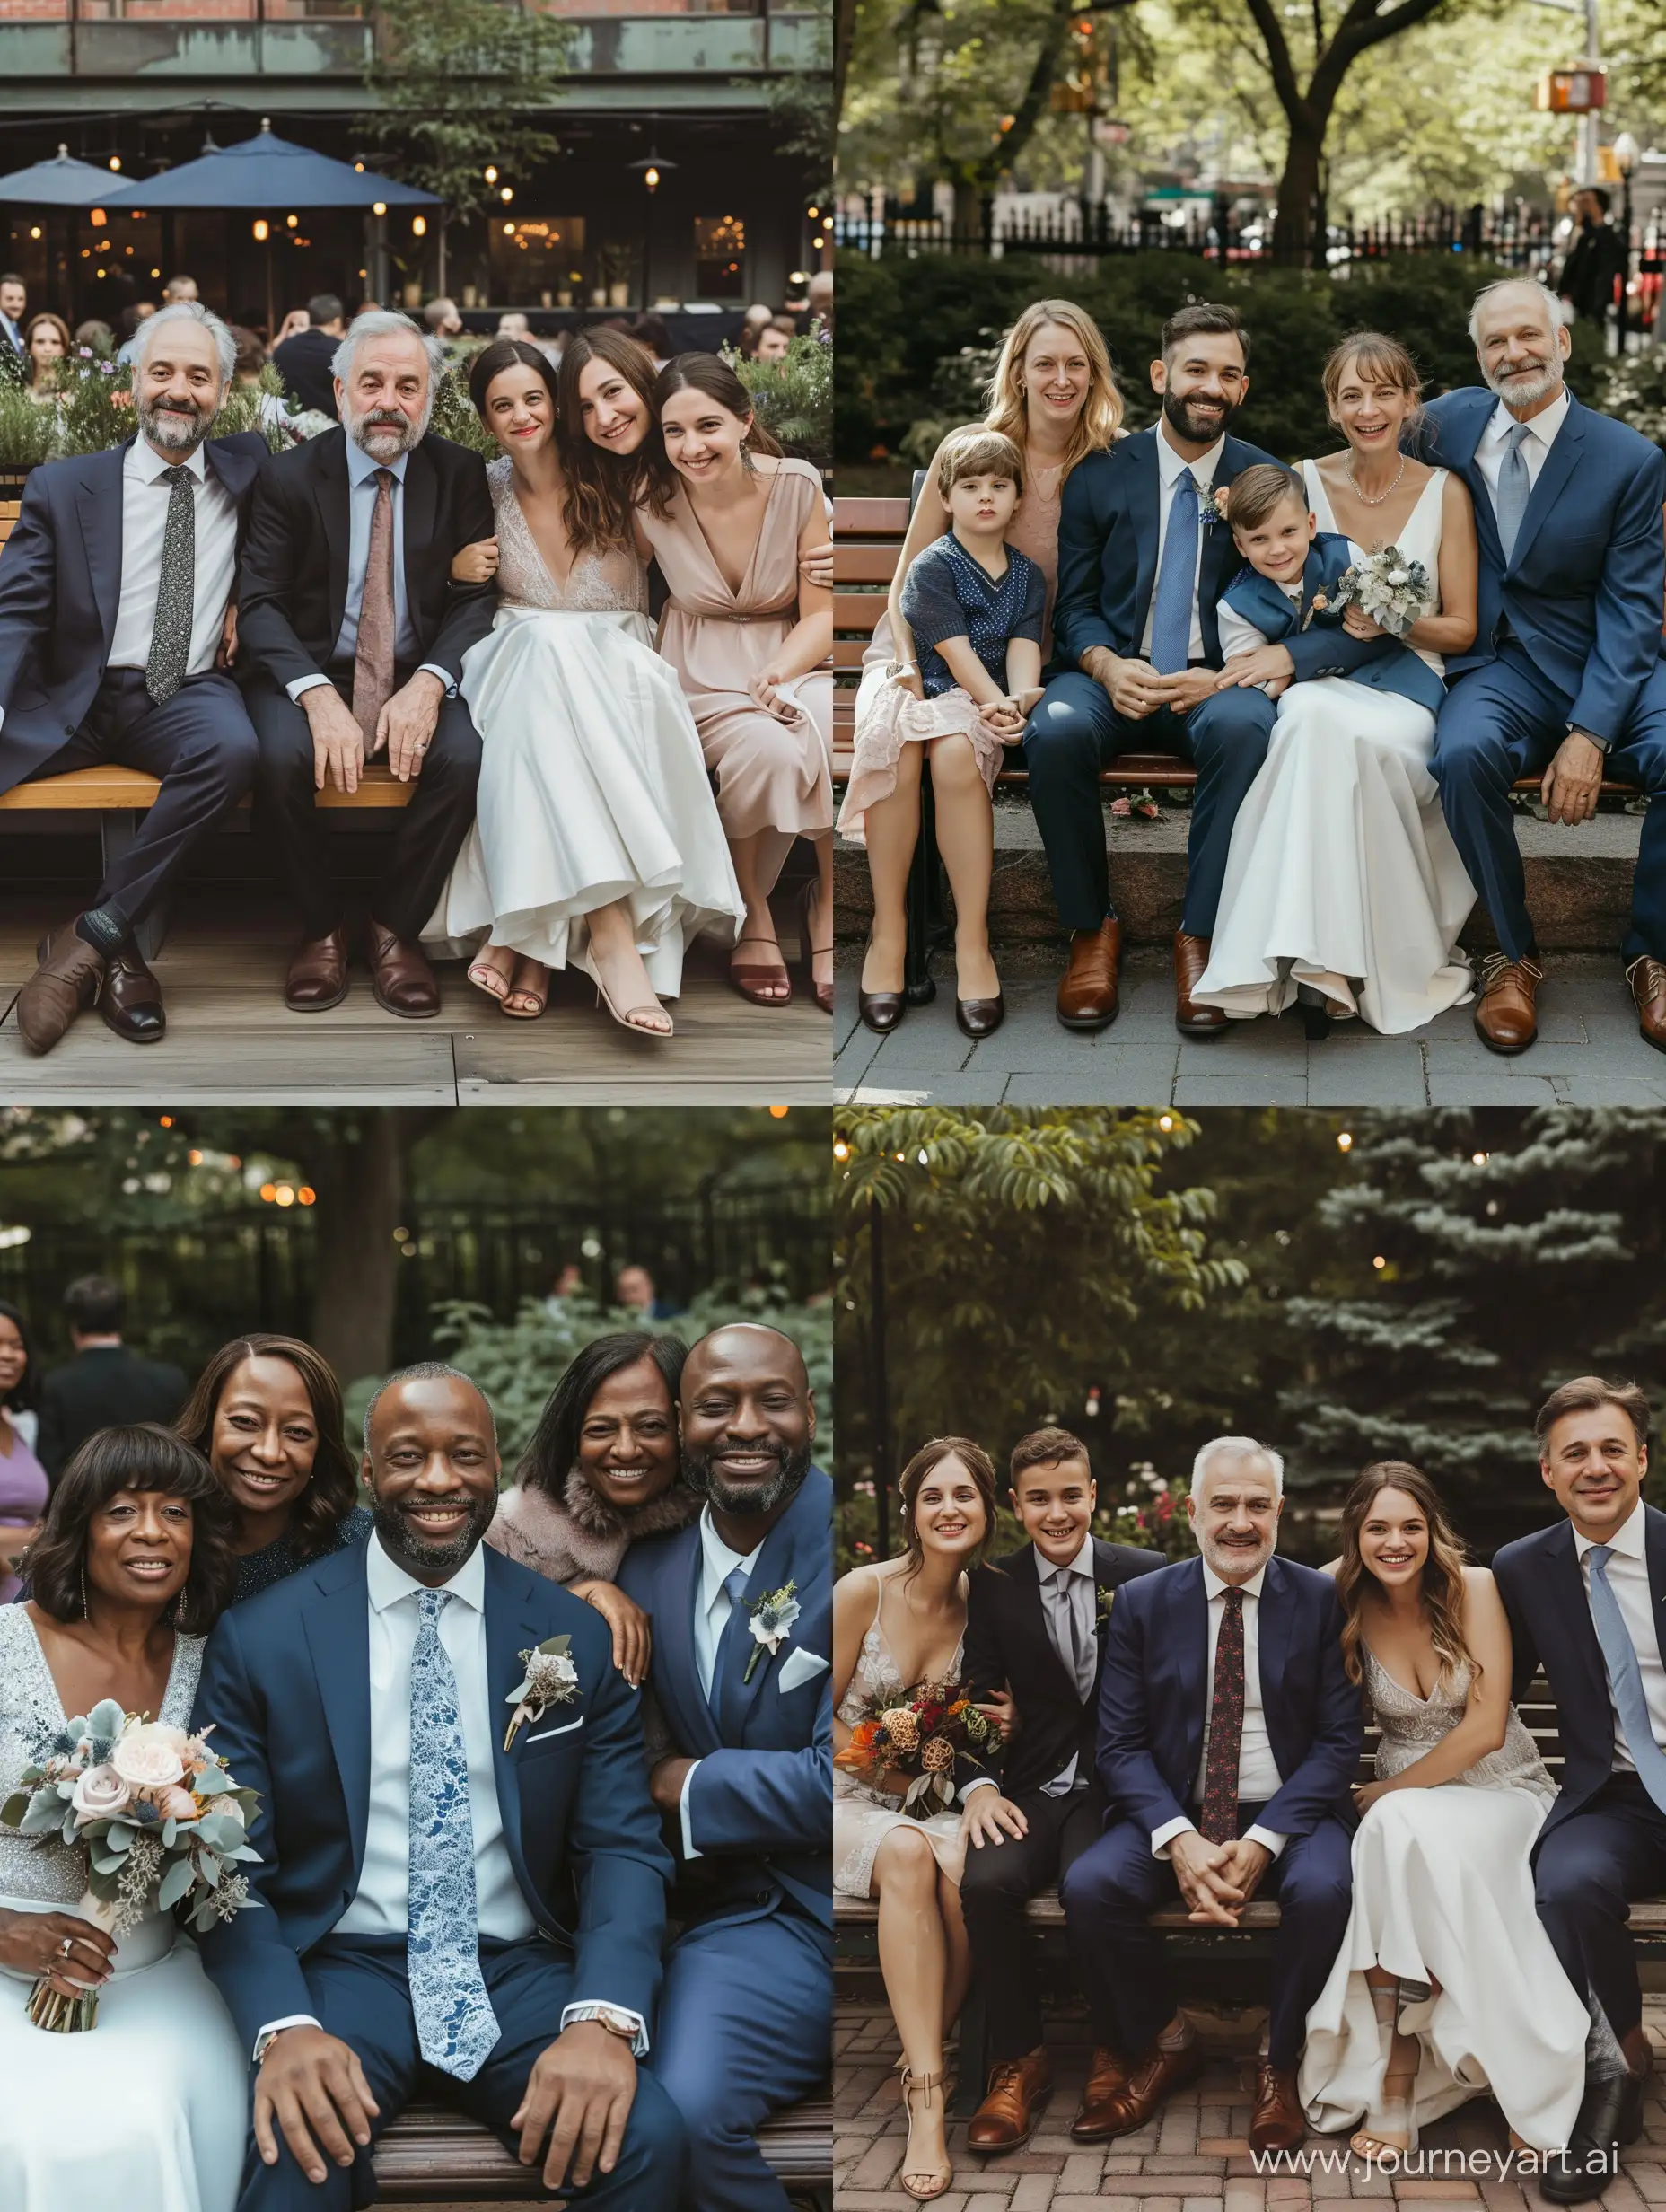 Joyful-Family-Celebration-at-a-New-York-Wedding